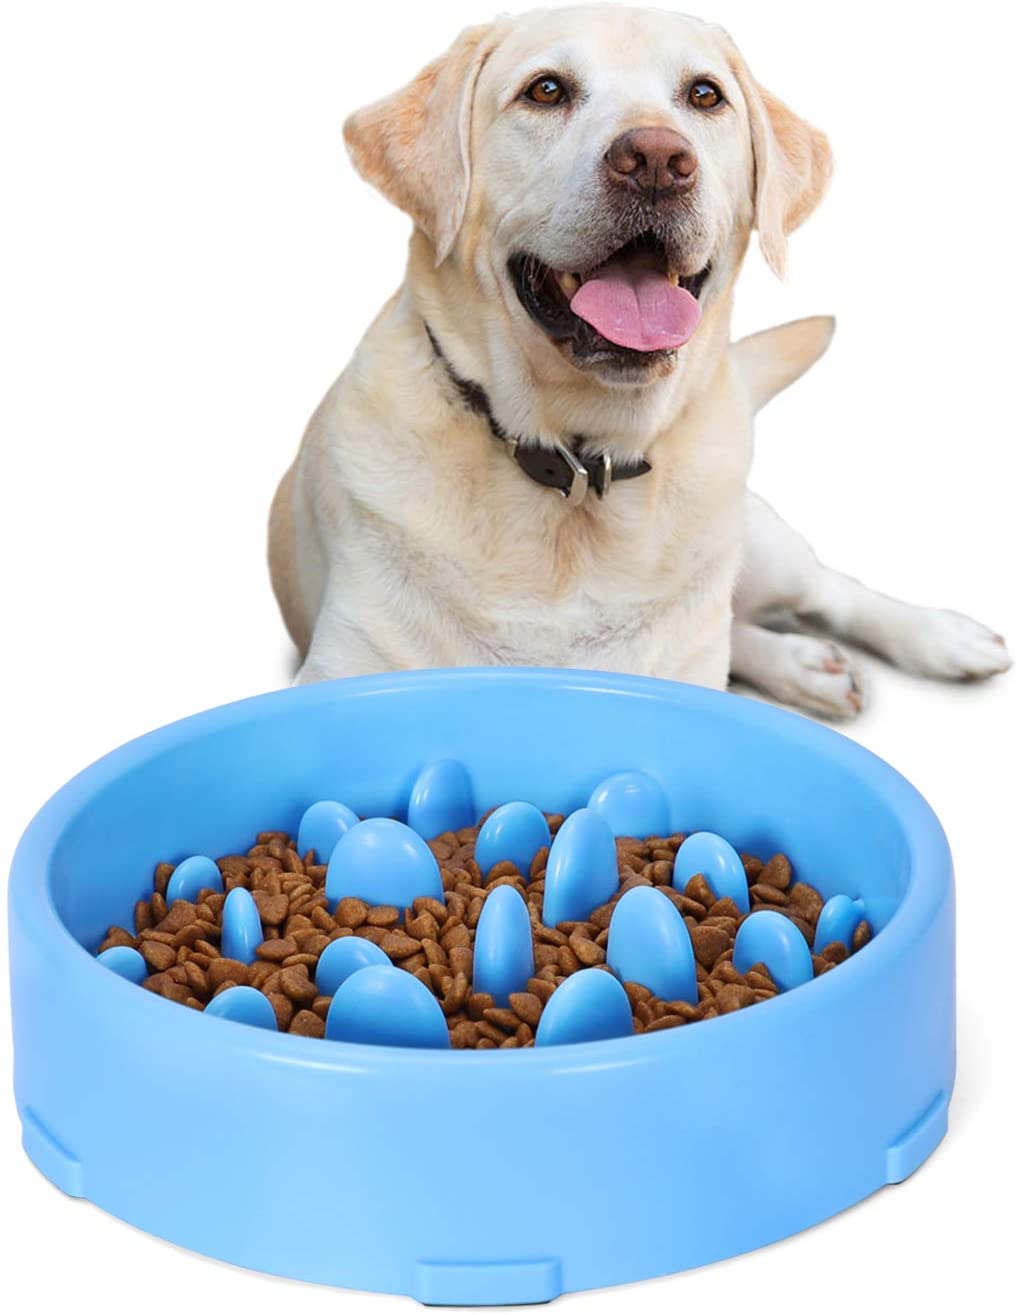 

Dog Slow Feeder Bowl Anti-Gulping Pet Slower Feeding Dishes Durable Preventing Choking Healthy Design Dogs